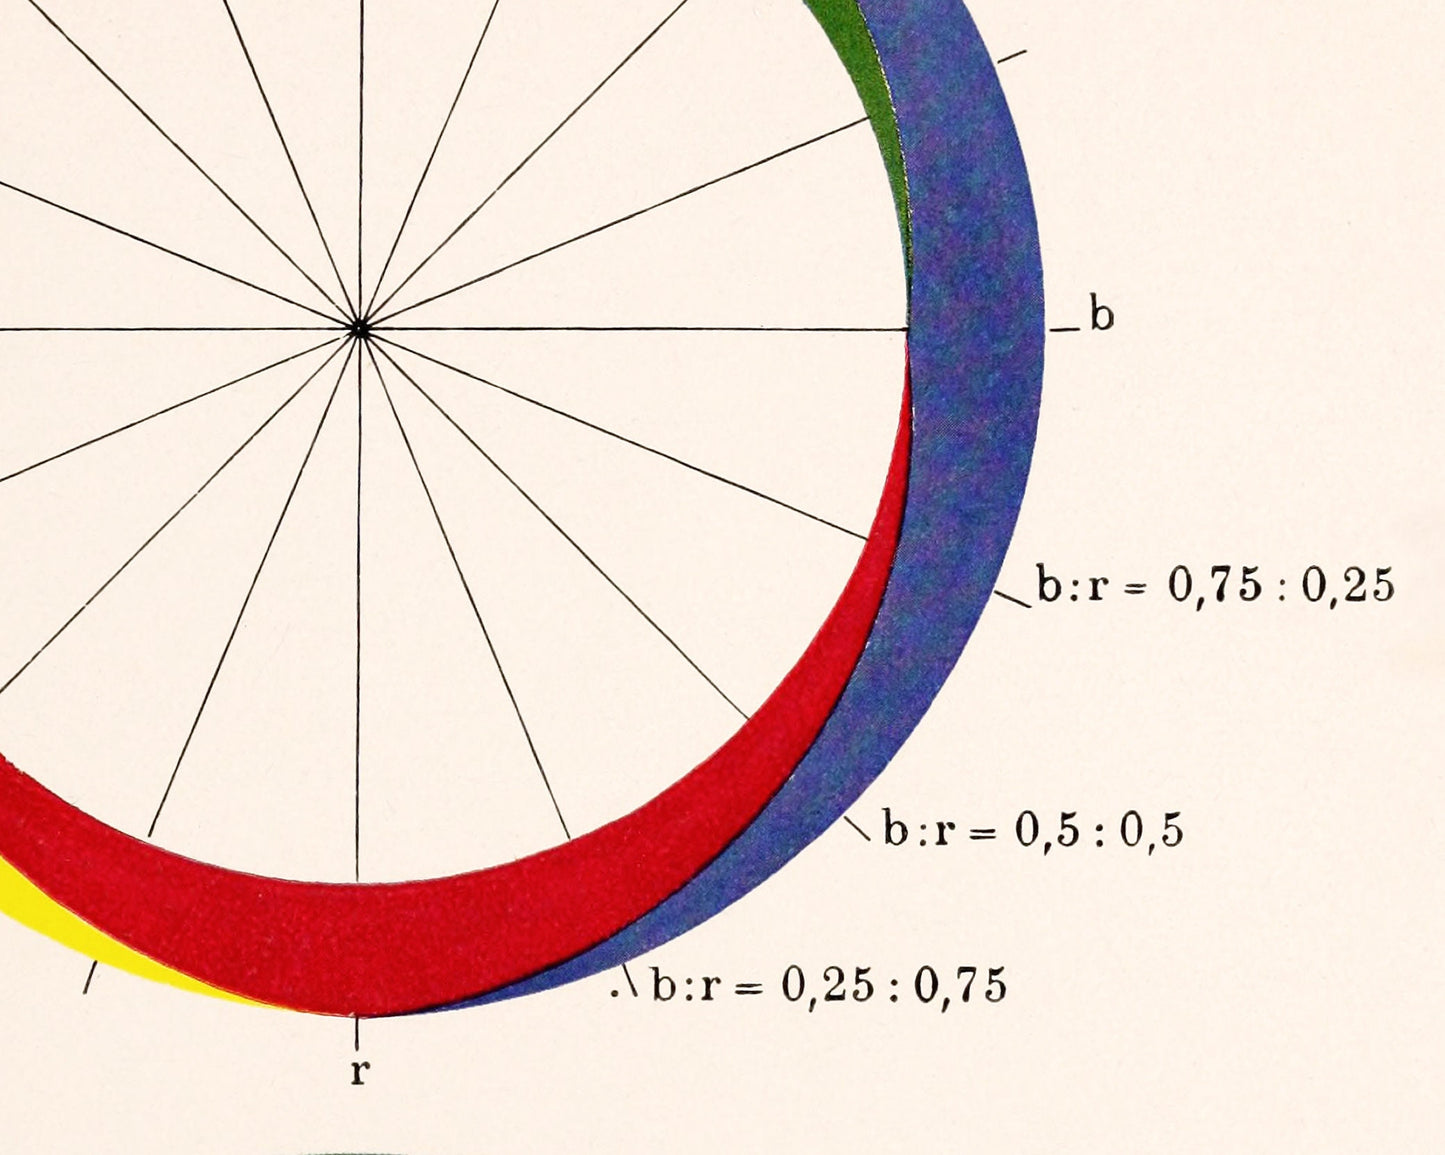 Vintage color chart | Color wheel | Primary colors wall art | Antique design &  color theory | Modern vintage décor